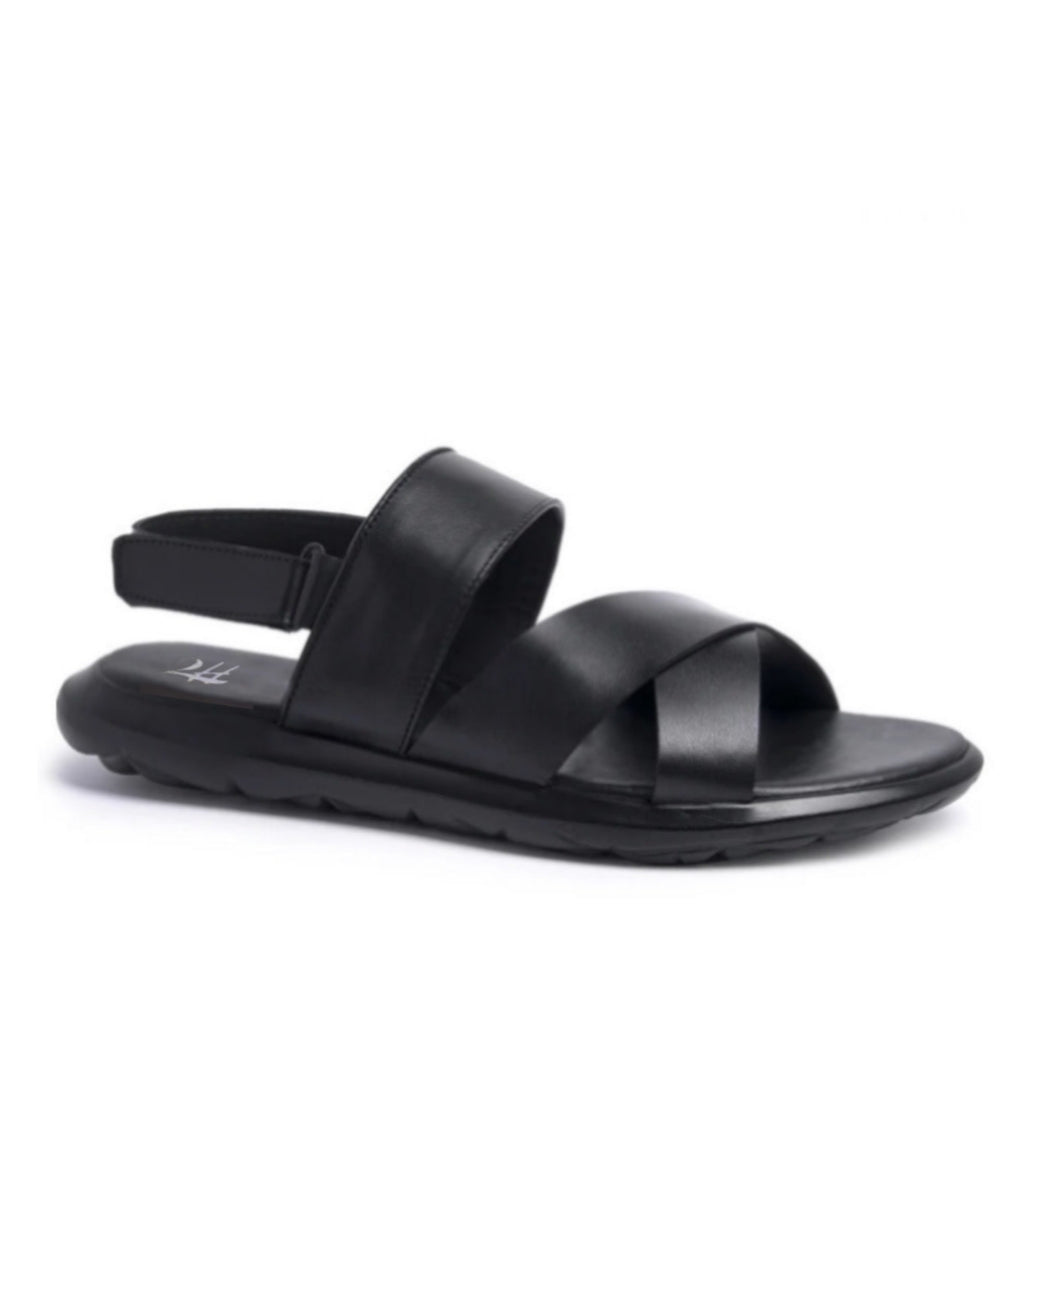 2H G10-23-1 Black Leather Sandals